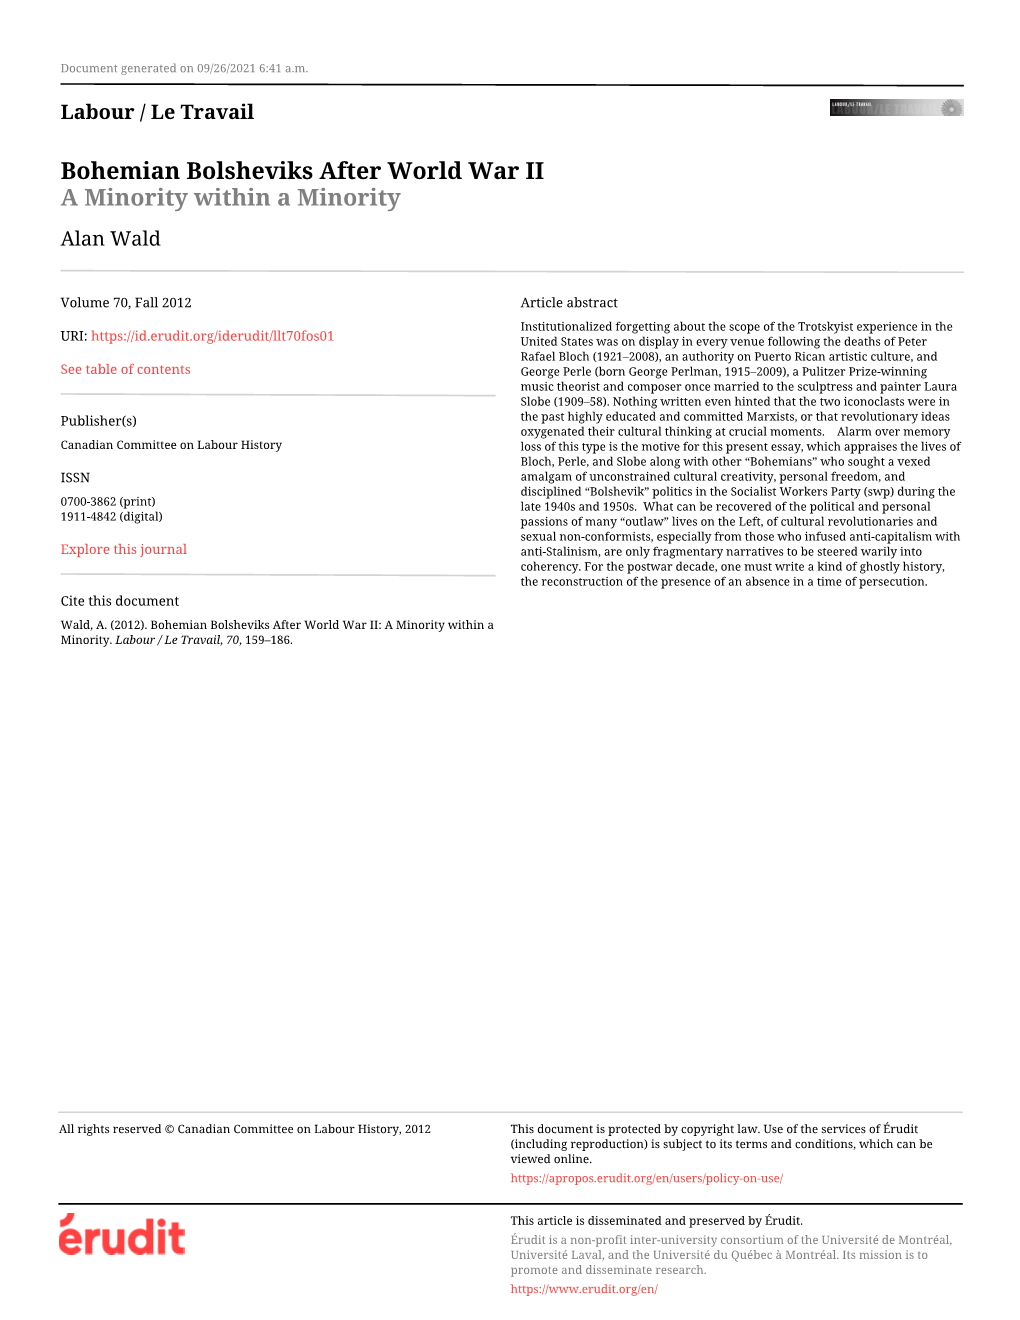 Bohemian Bolsheviks After World War II a Minority Within a Minority Alan Wald